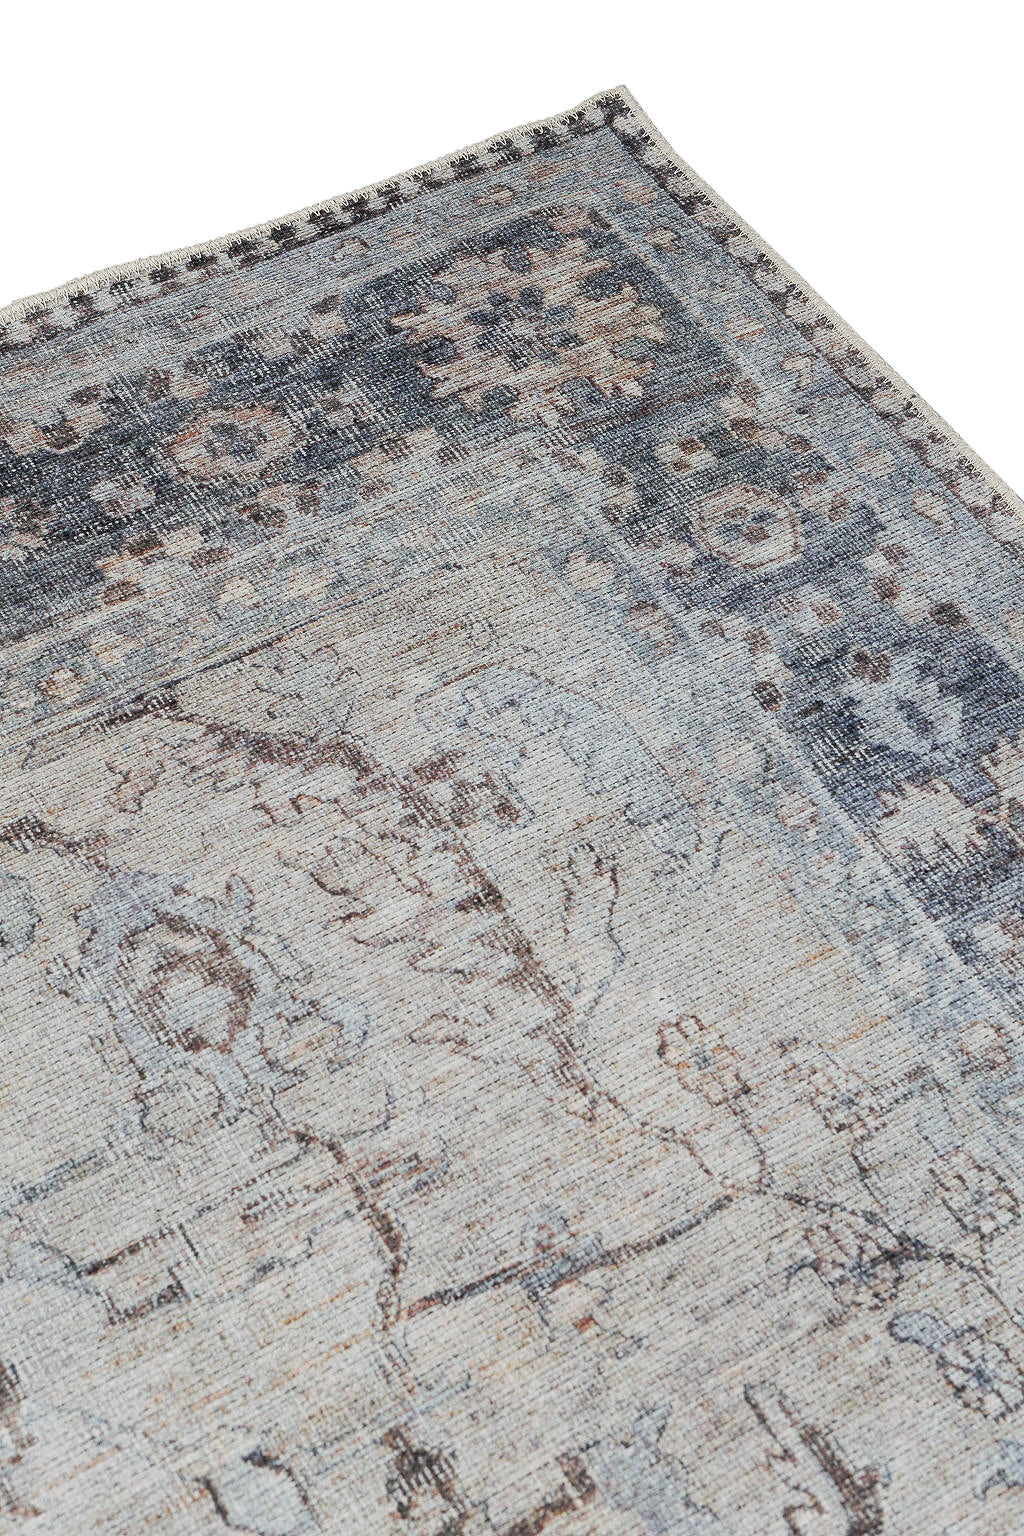 Blue bordered vintage style rug